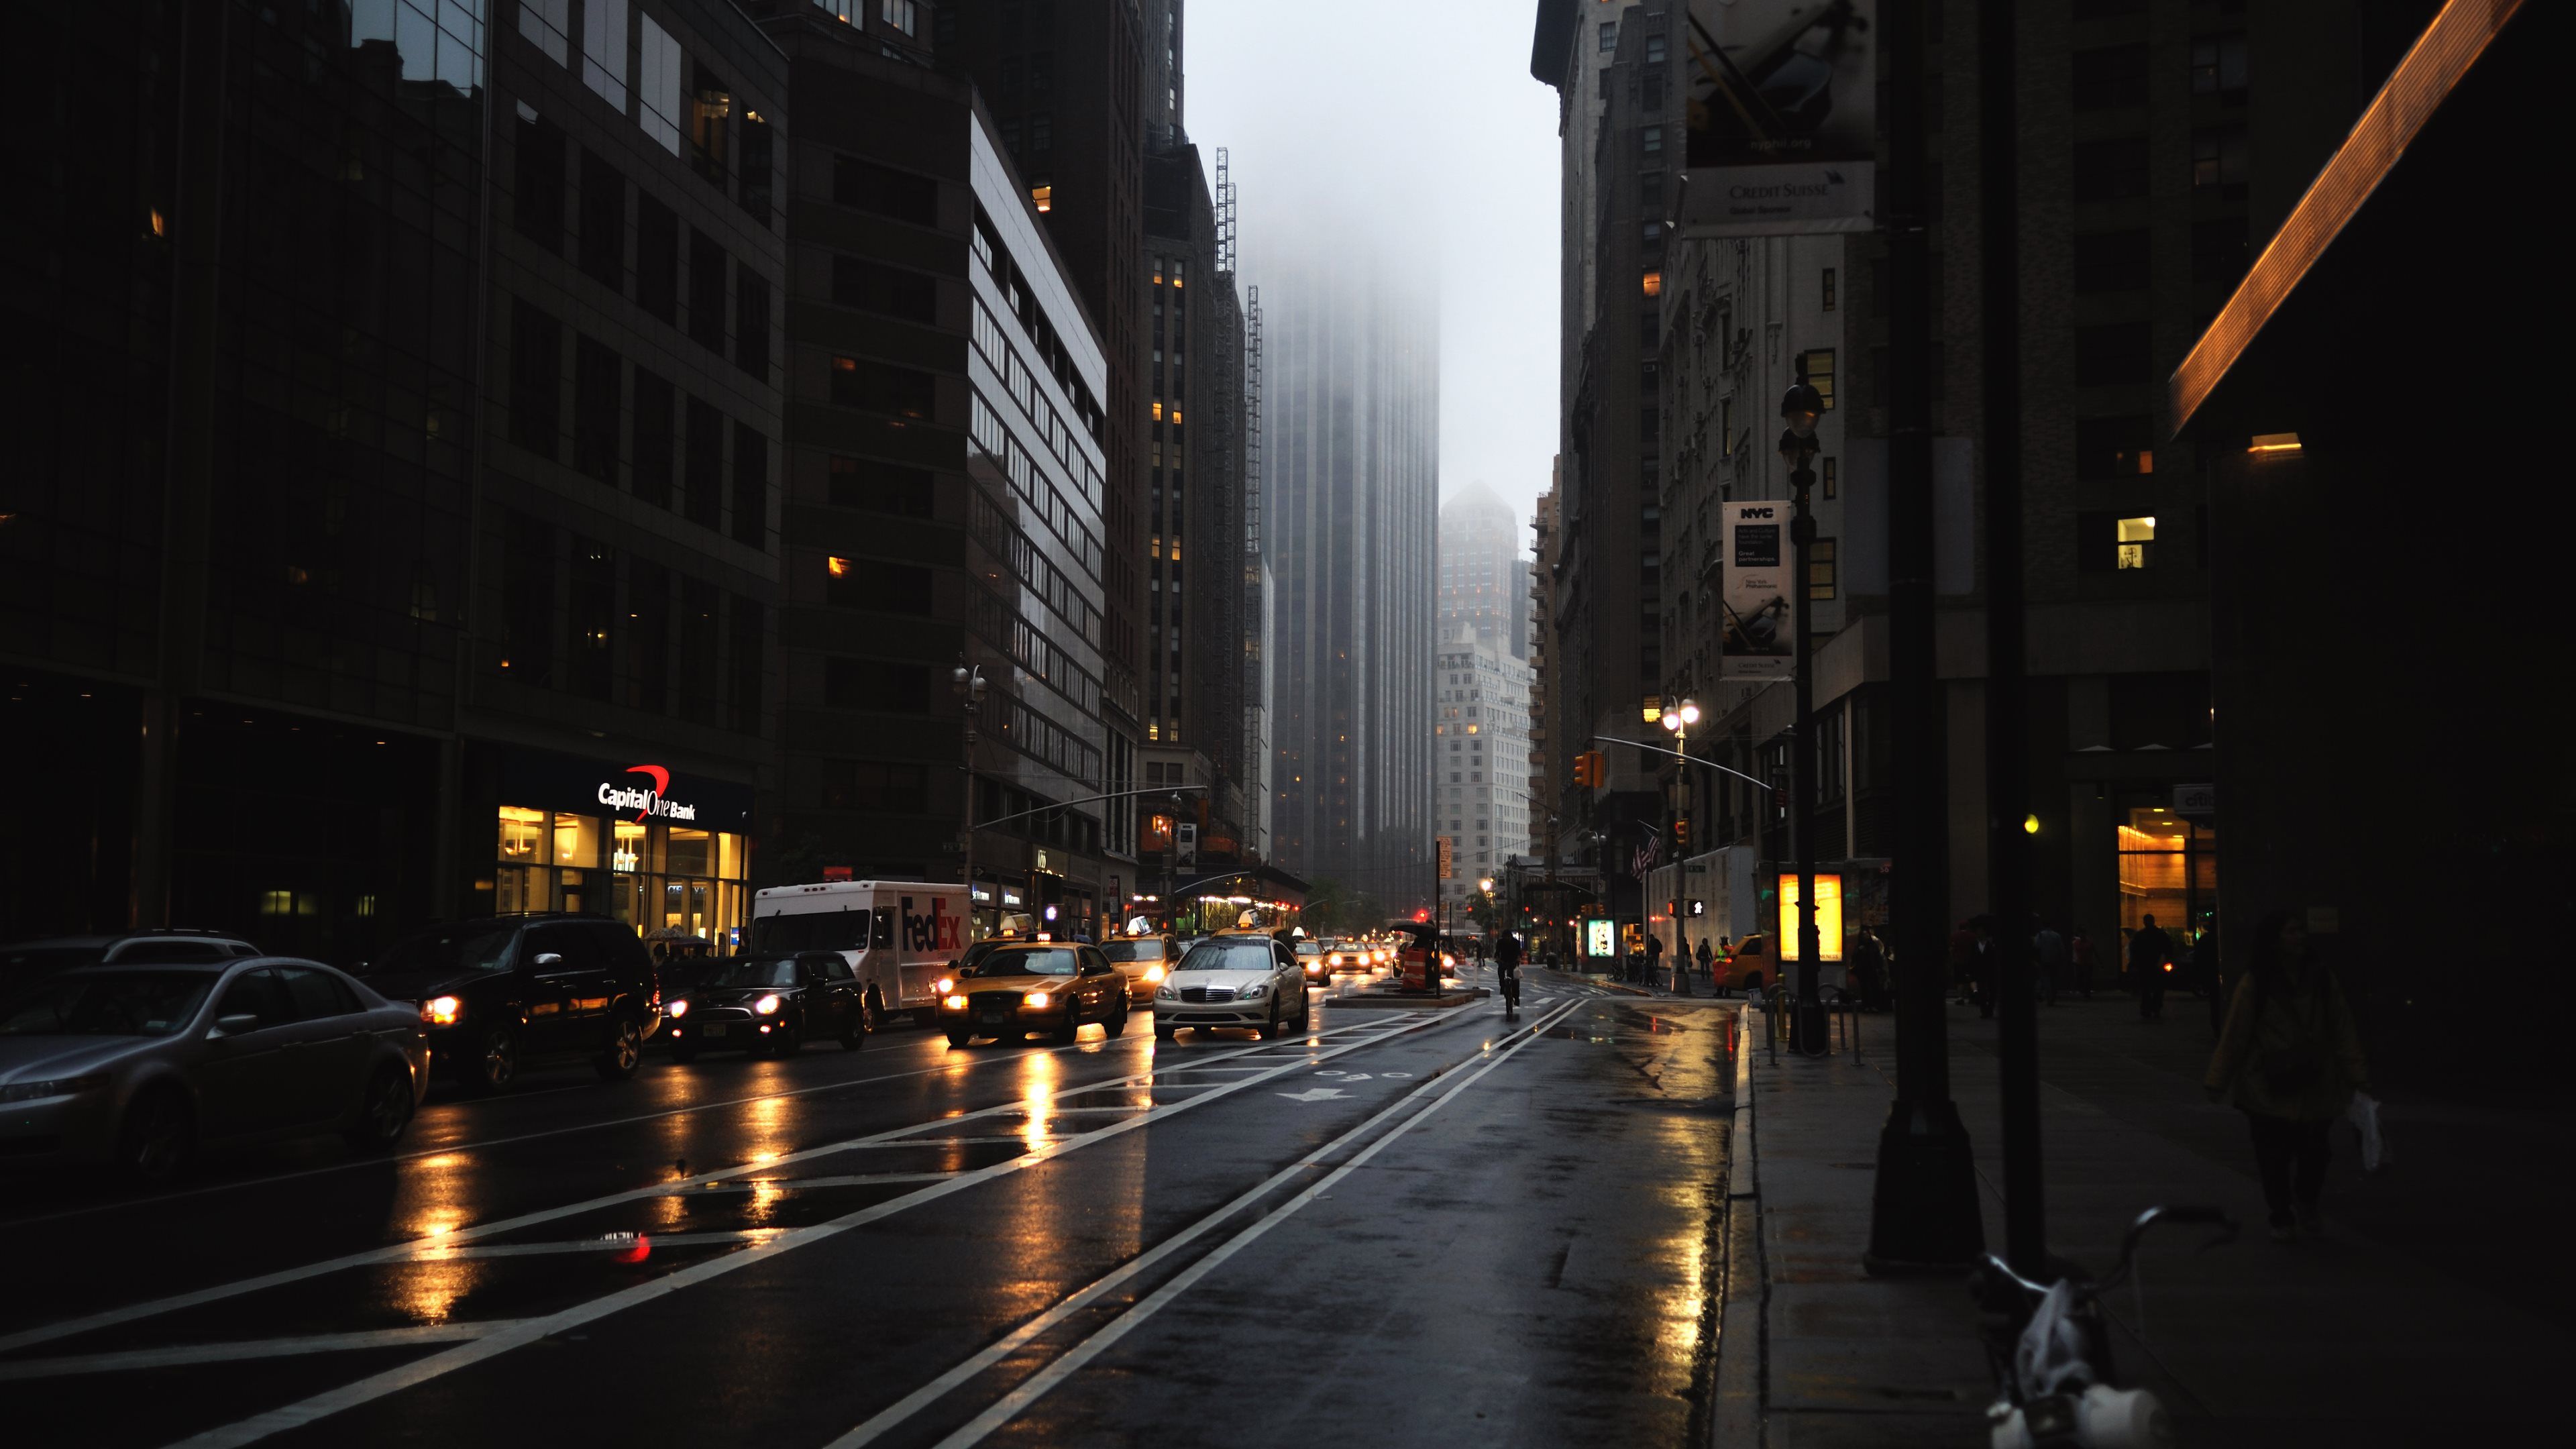 Rainy Day in New York City [3840x2160]